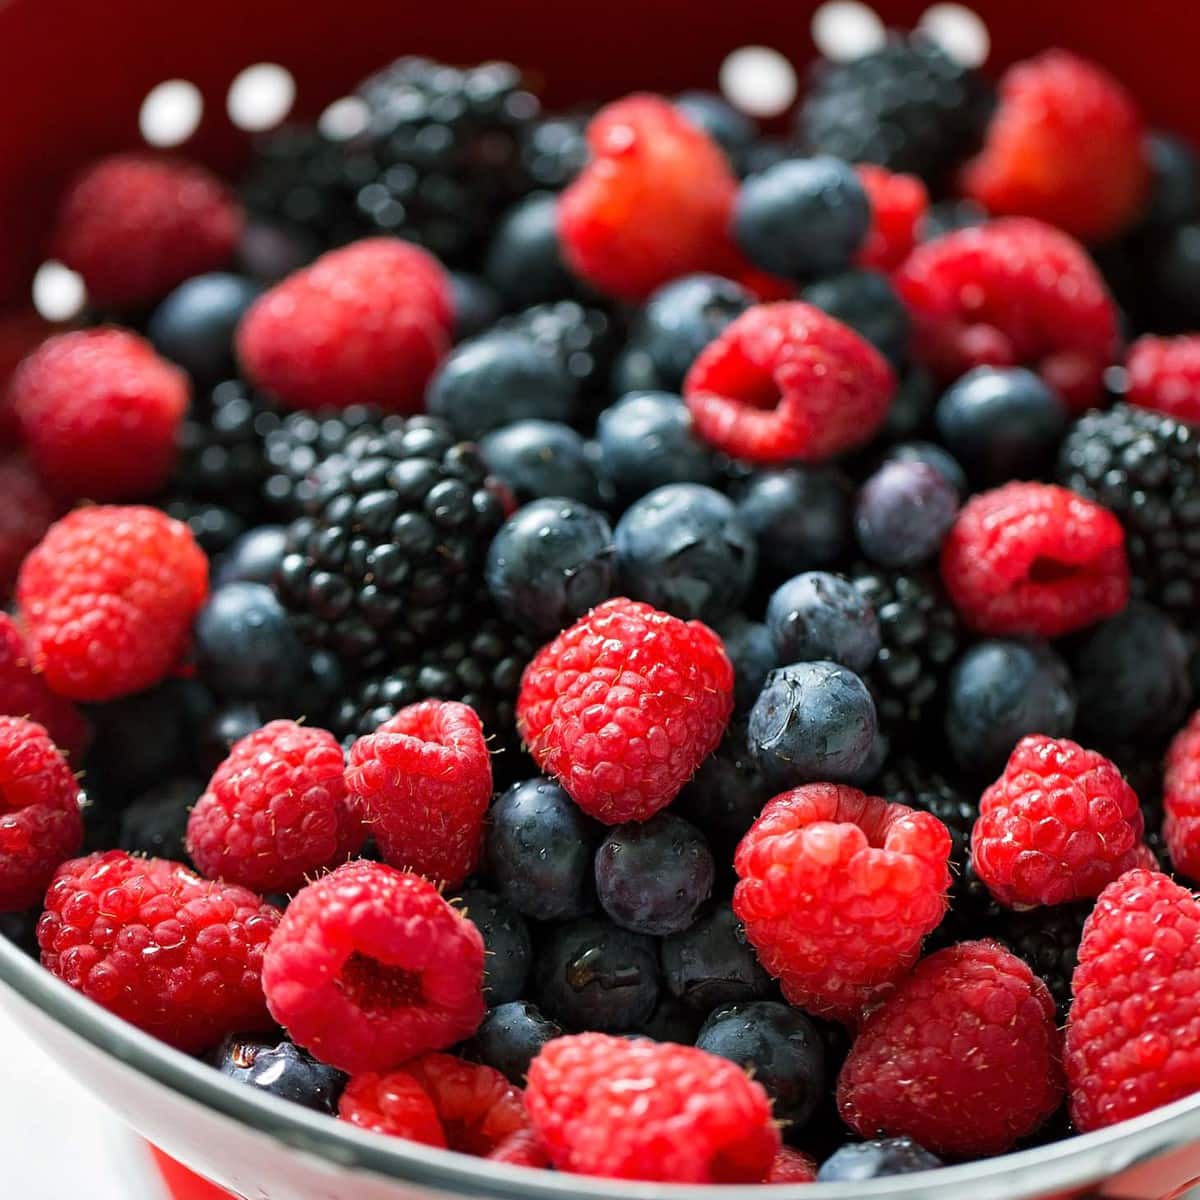 Raspberries, blackberries, and blueberries for berry frosting